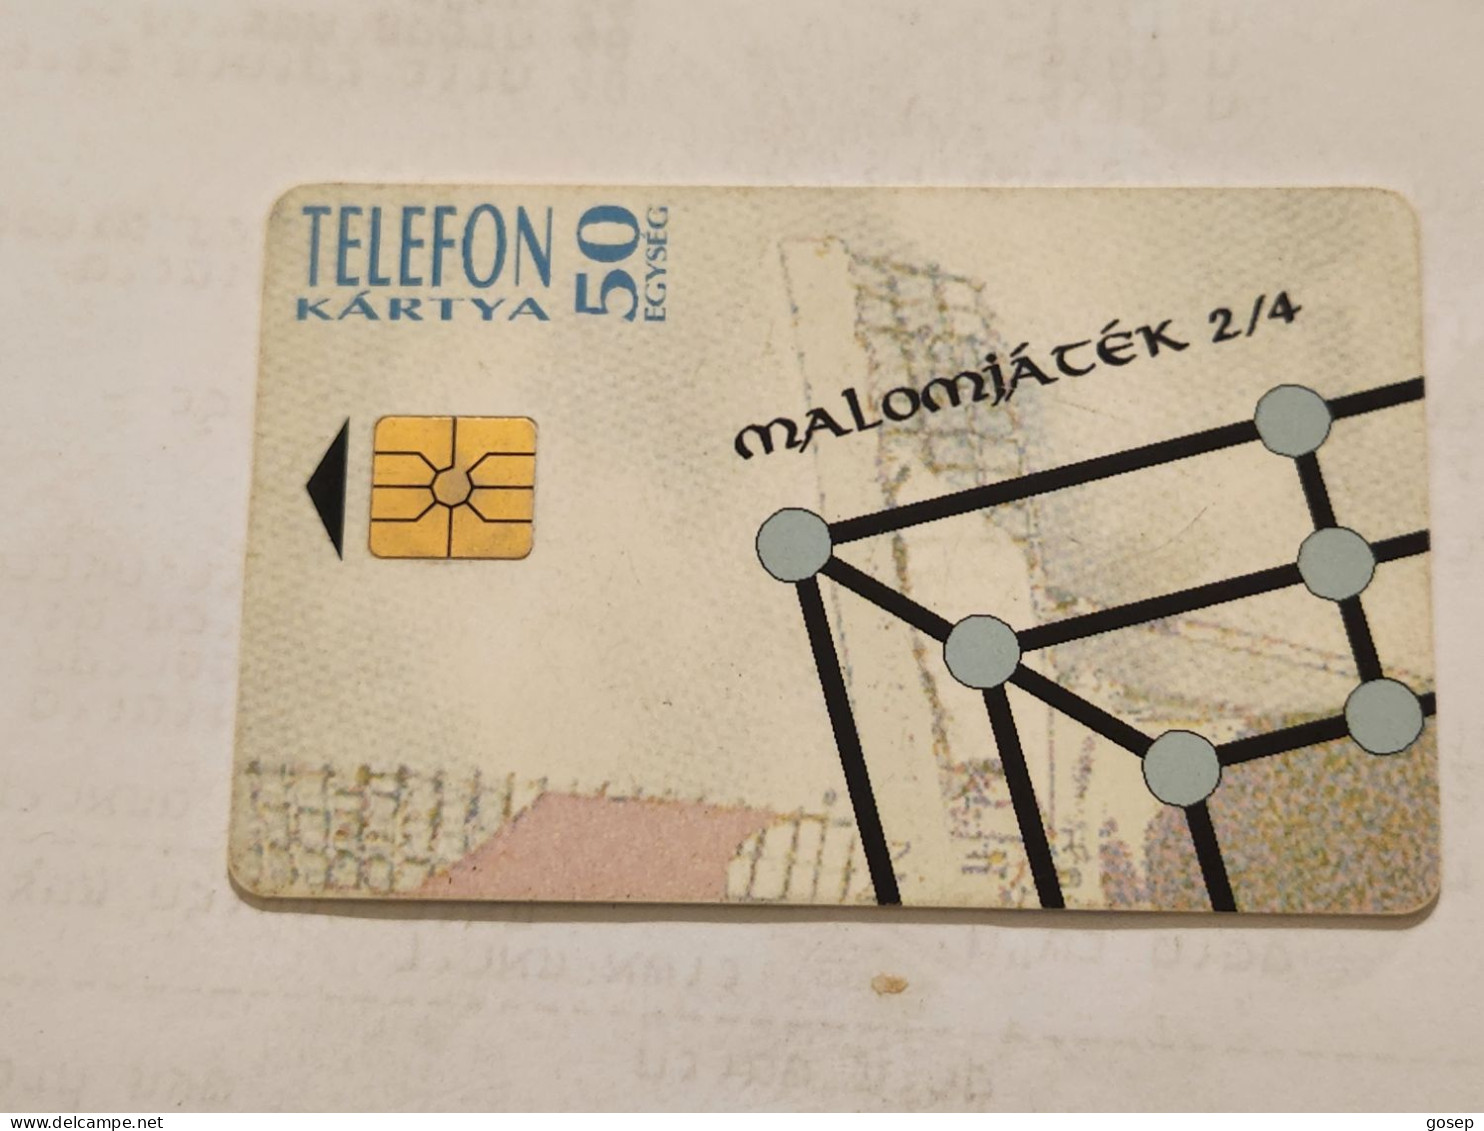 HUNGARY-(HU-P-1994-18Aa)-Malom -Tata (2/4)-(154)(50units)(1994)(tirage-250.000)-USED CARD+1card Prepiad Free - Hungary